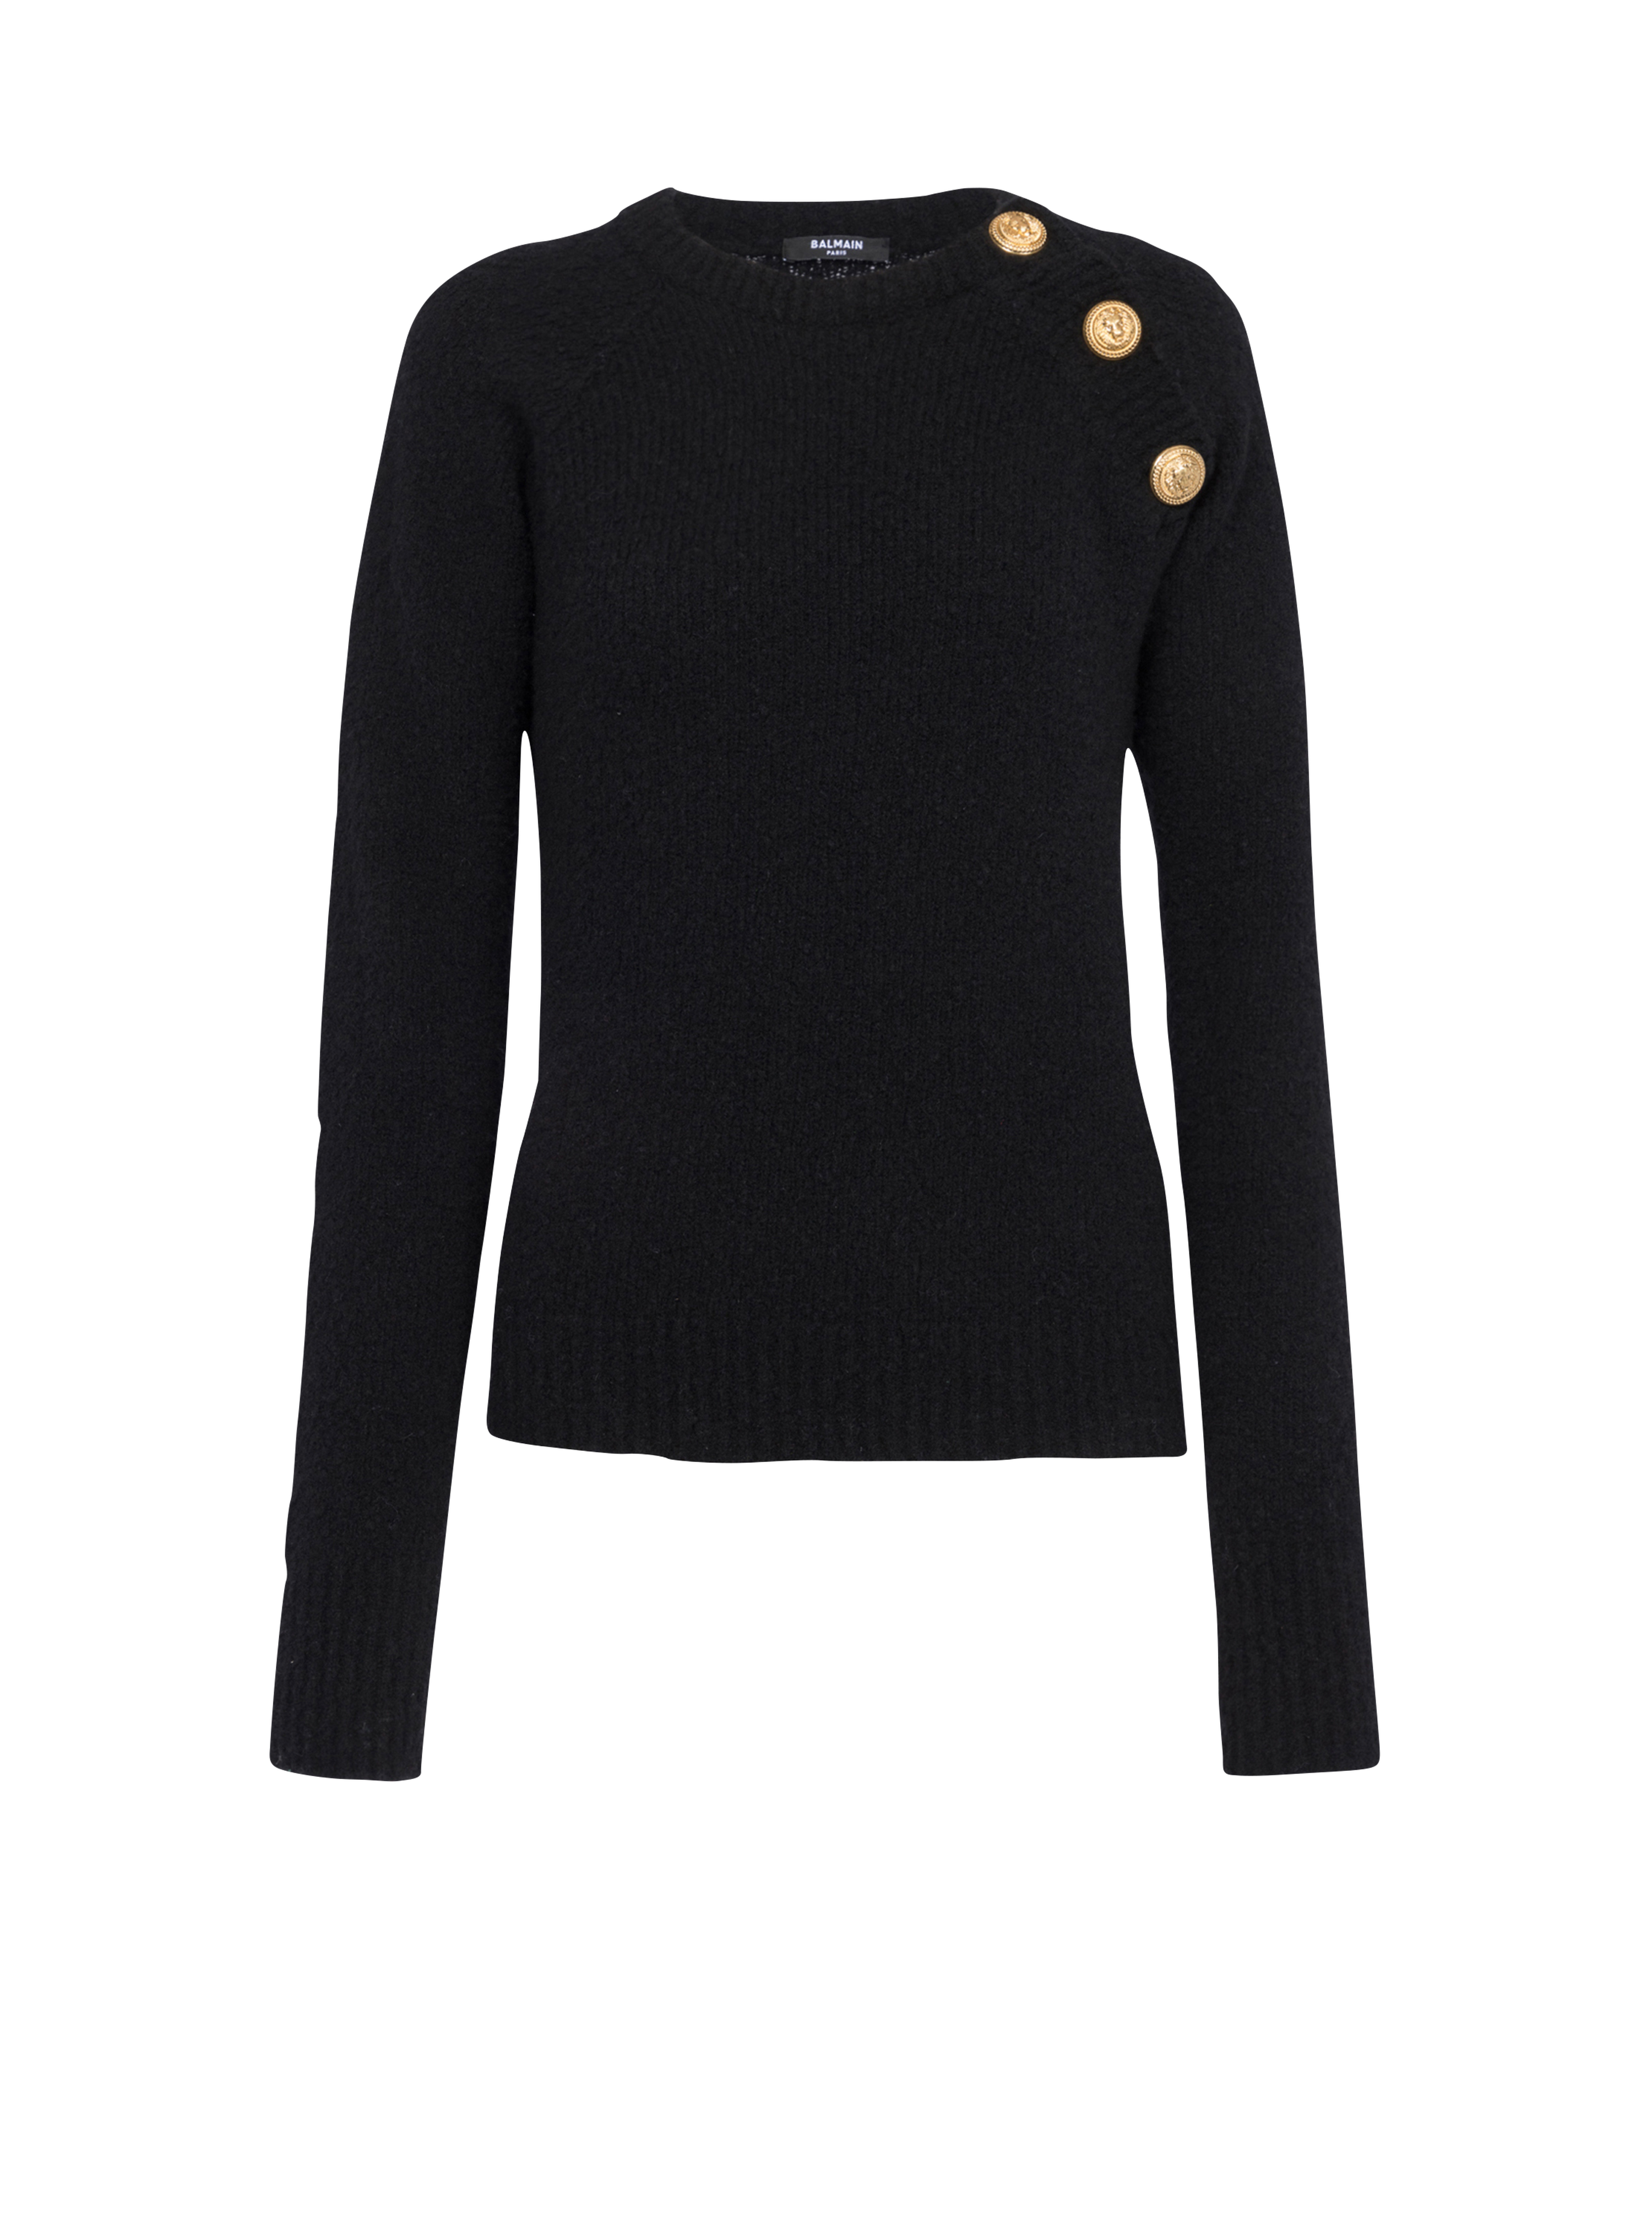 Cashmere sweater, black